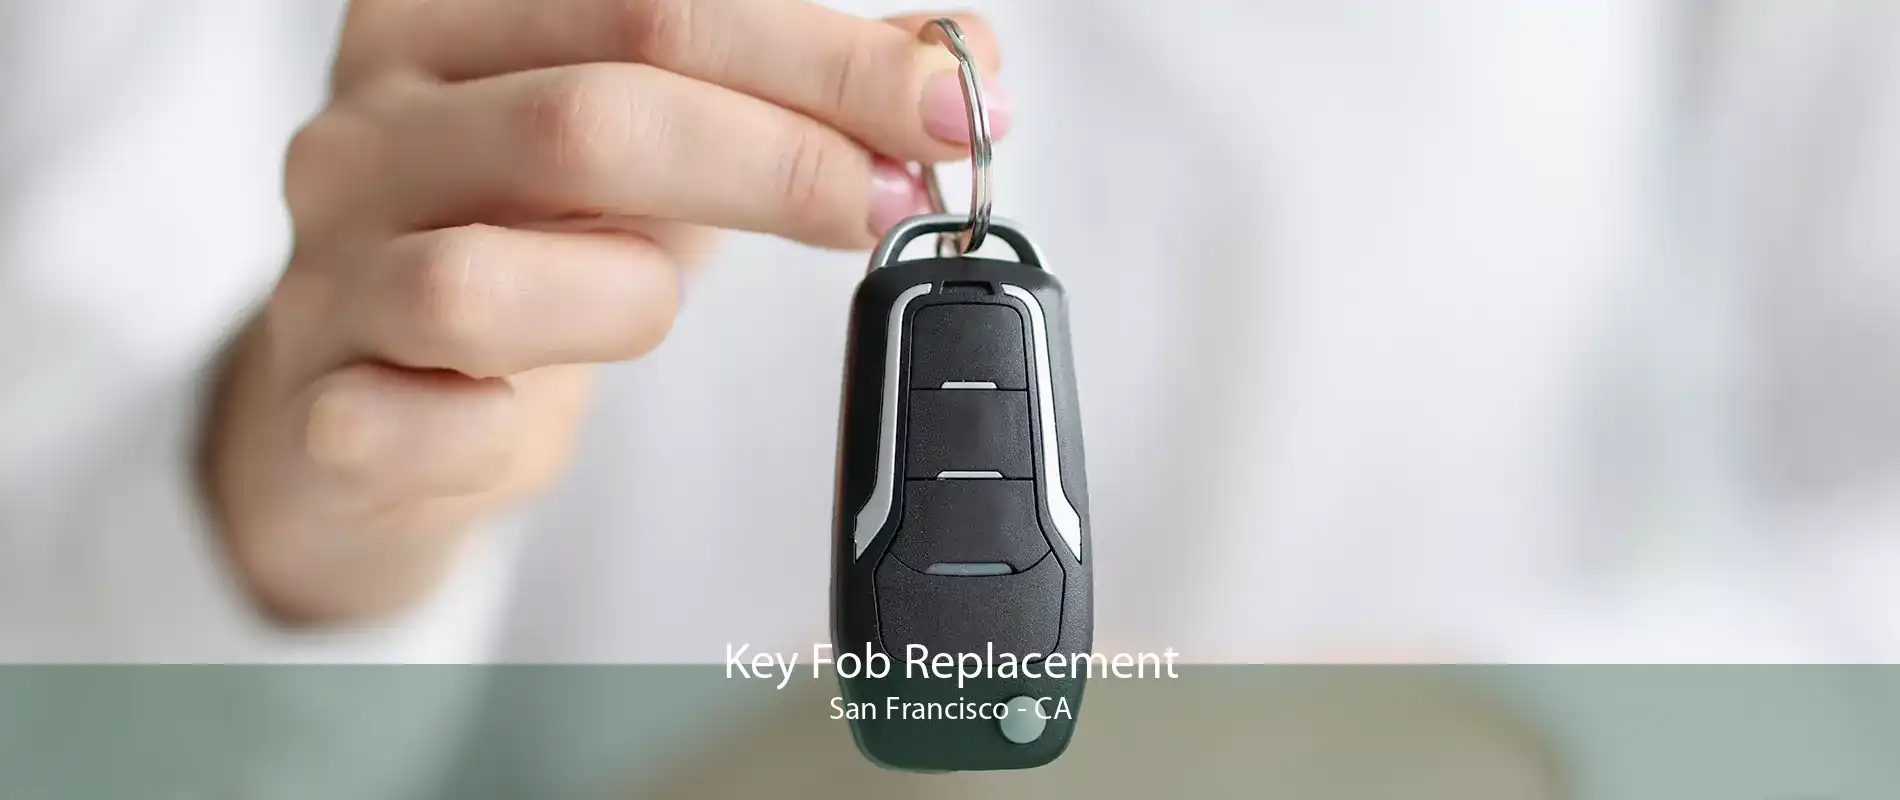 Key Fob Replacement San Francisco - CA